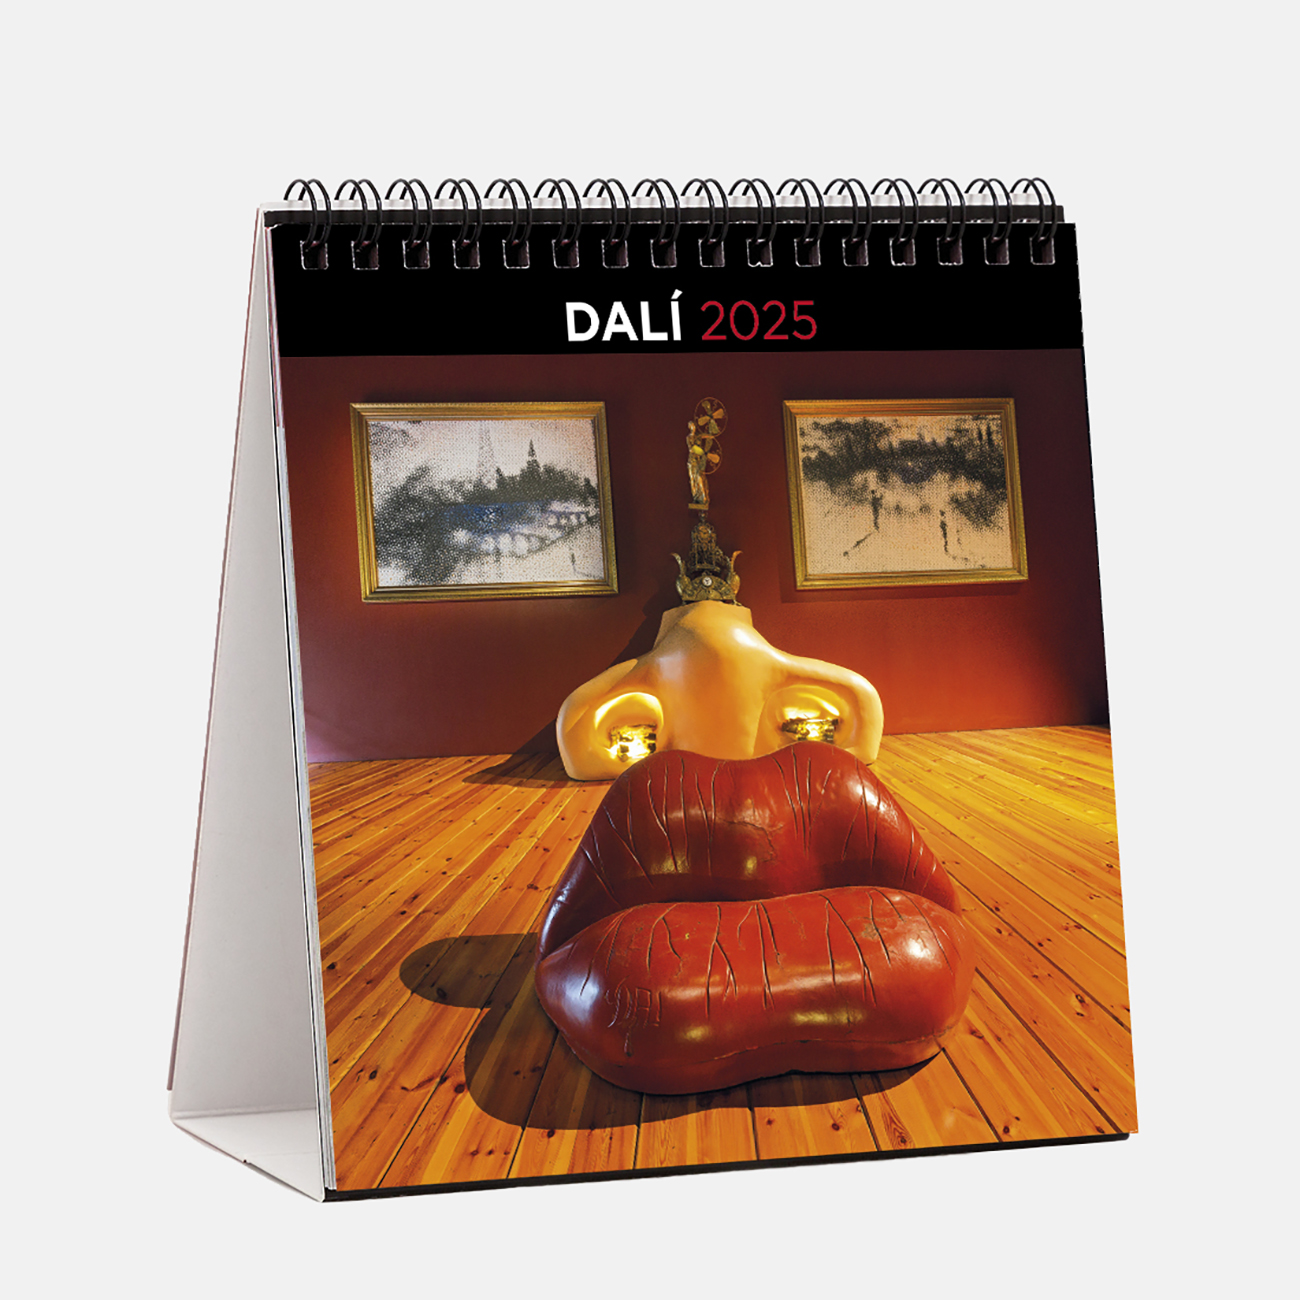 Calendrier 2025 Dalí s25d calendario sobremesa 2025 salvador dali